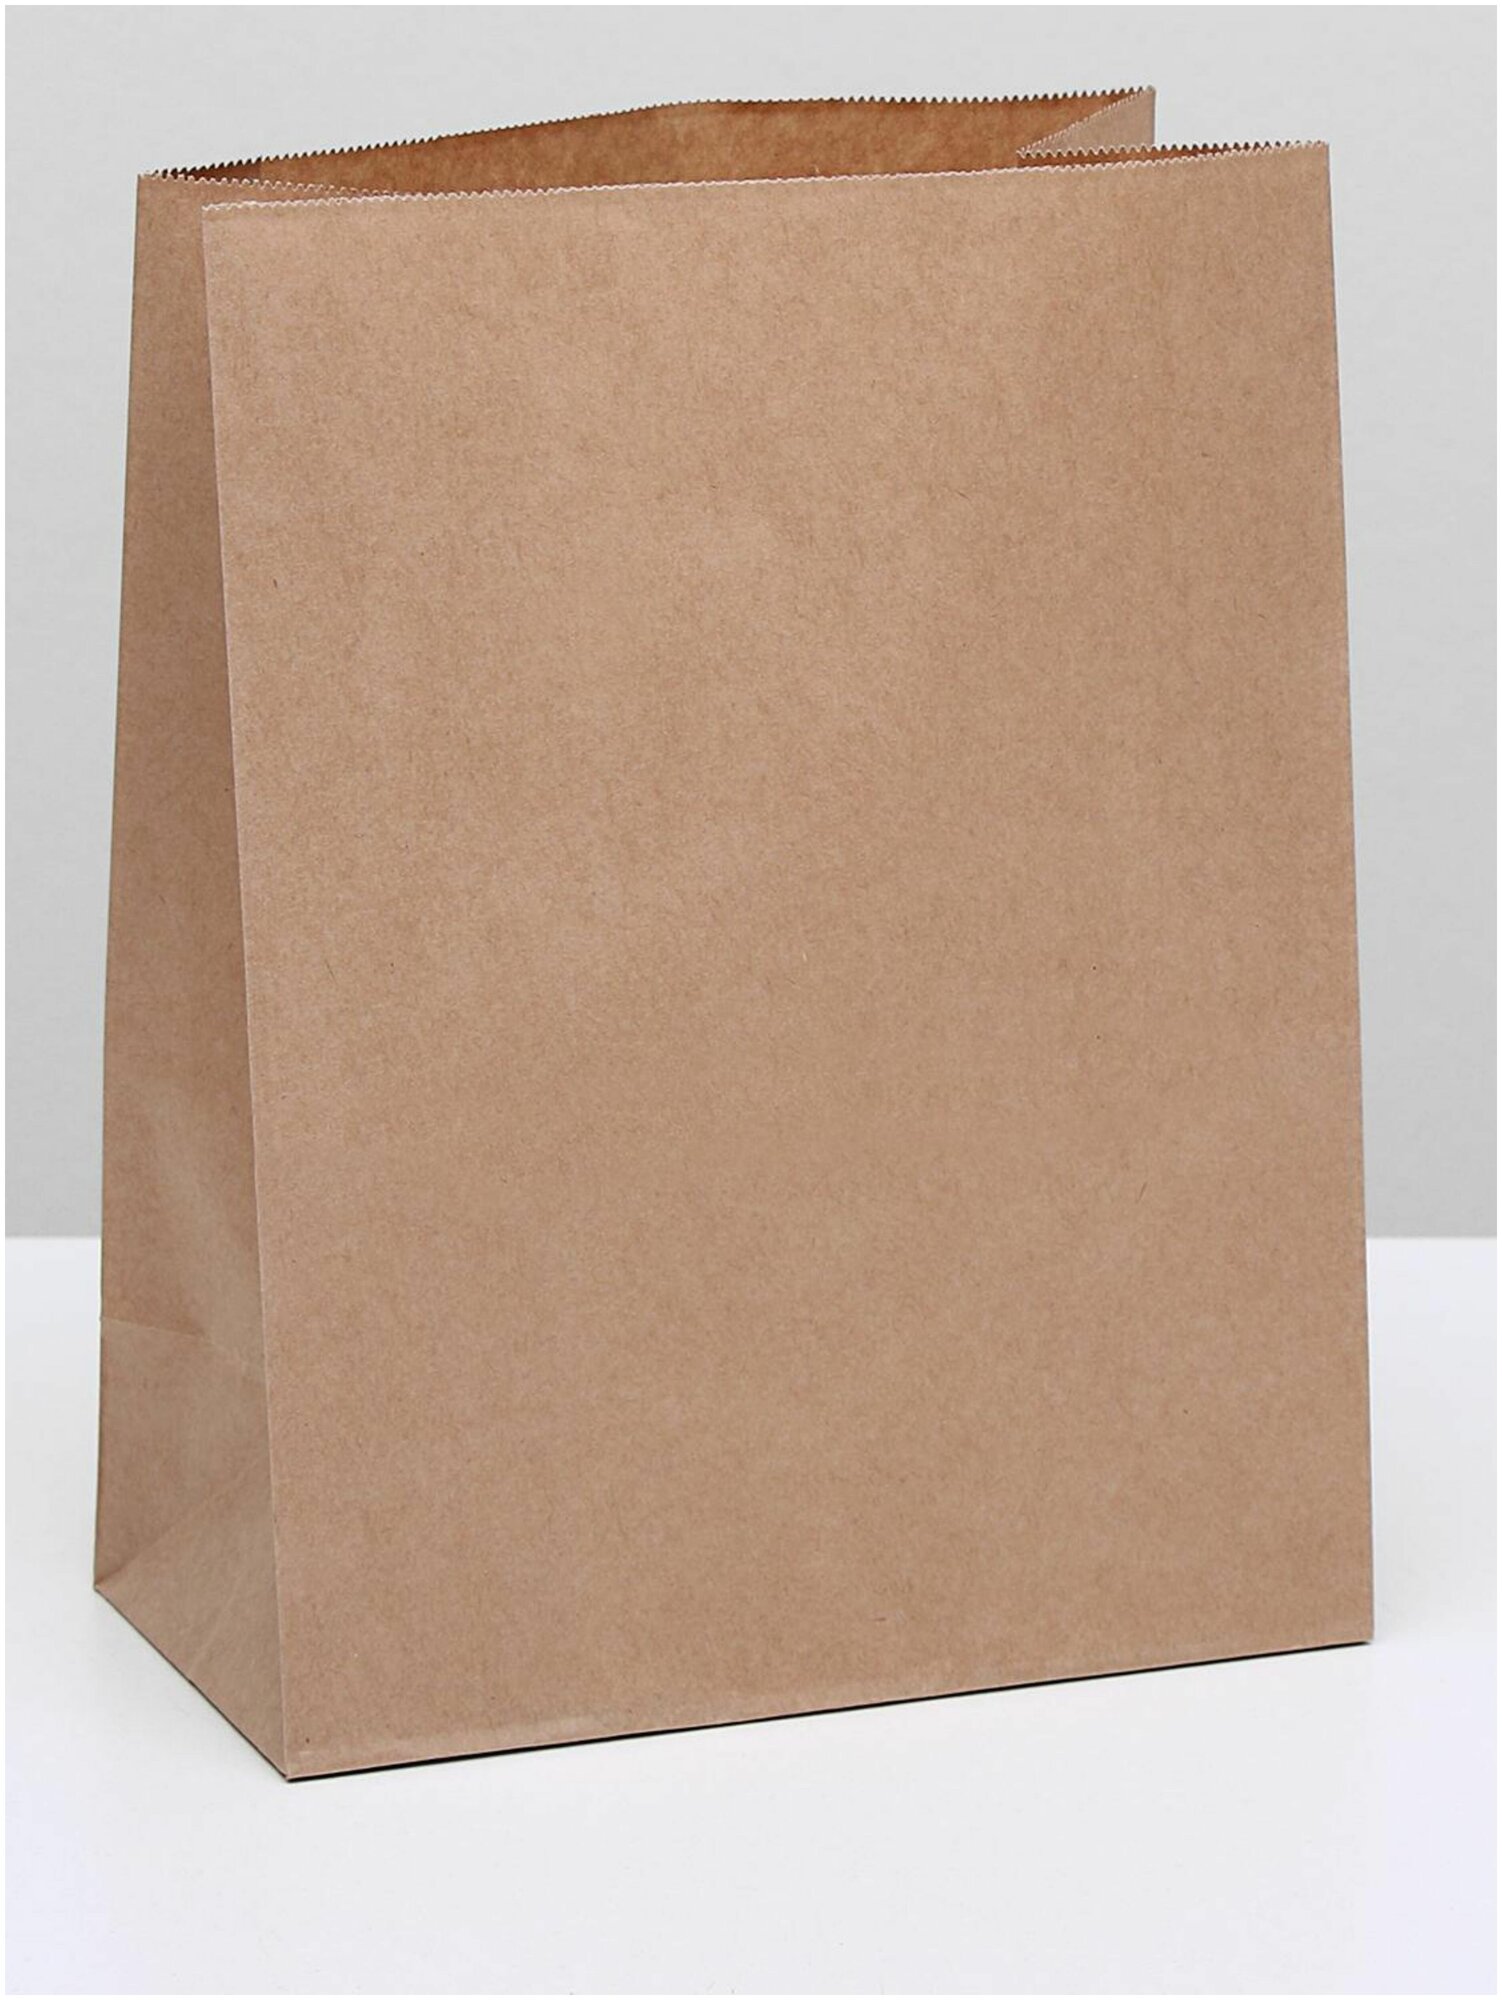 Пакеты бумажные крафт / 32х16 см / для завтраков / для упаковки / 50 шт